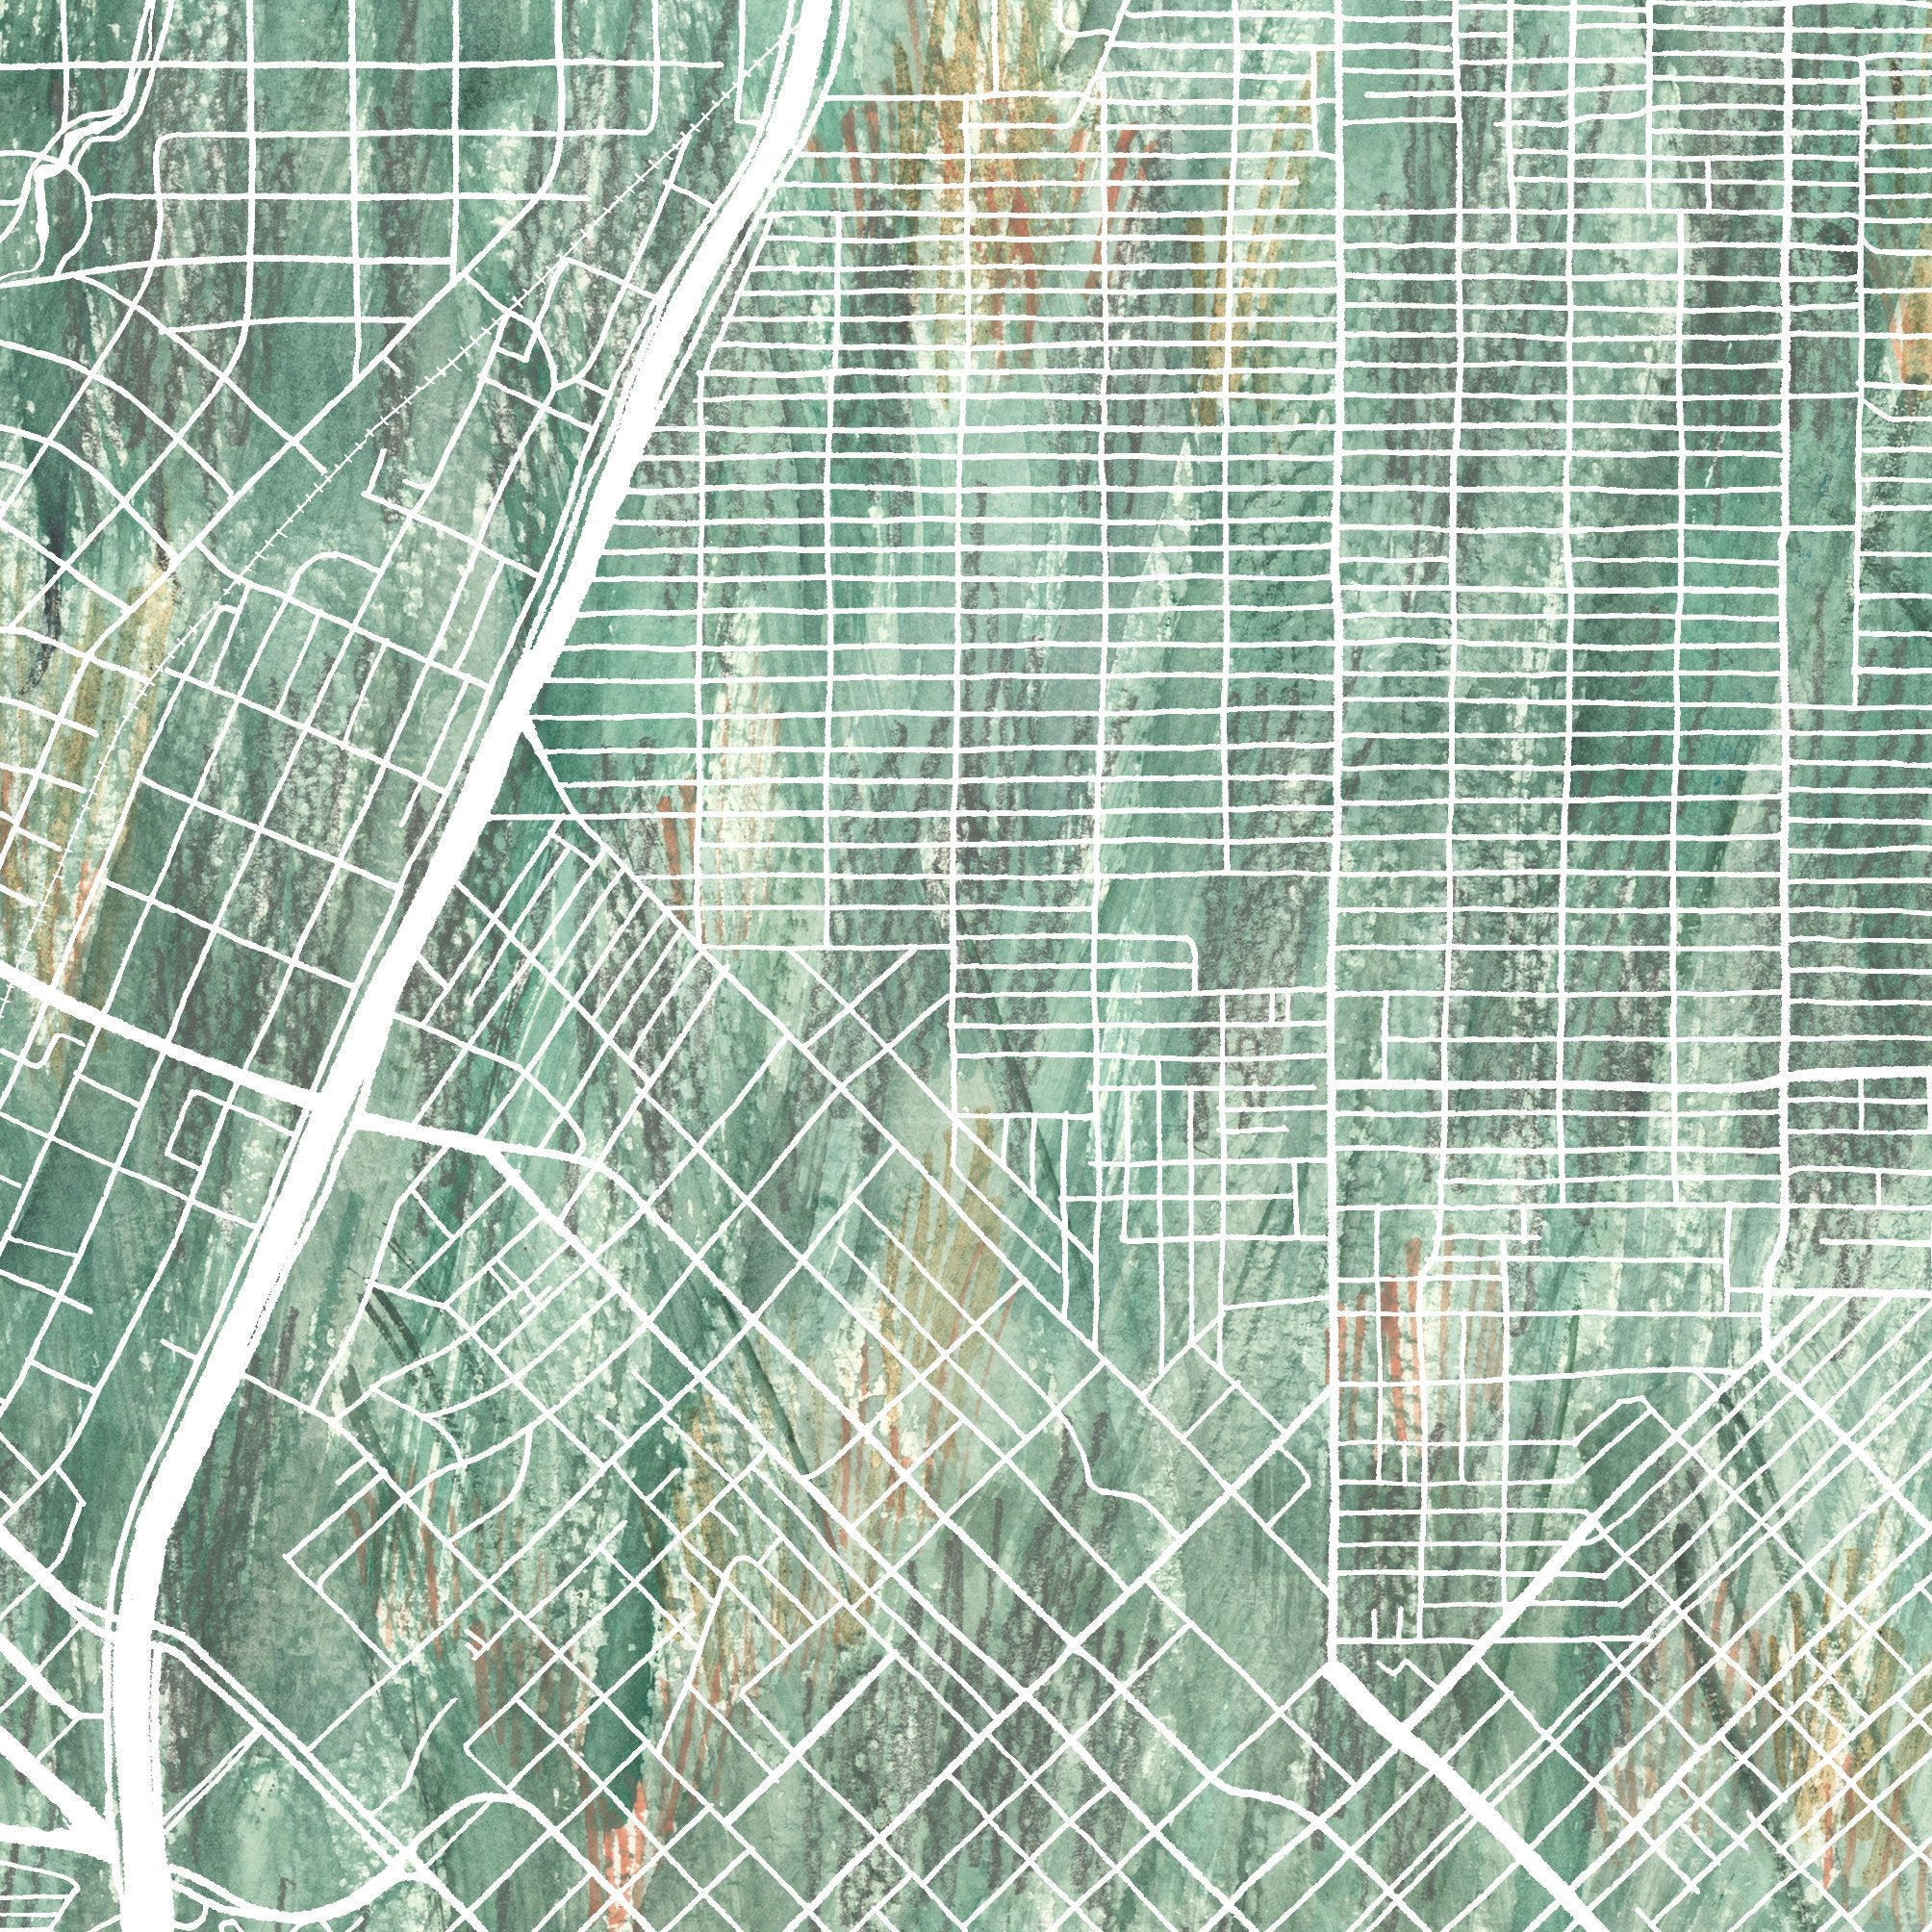 DALLAS Urban Fabrics City Map: PRINT